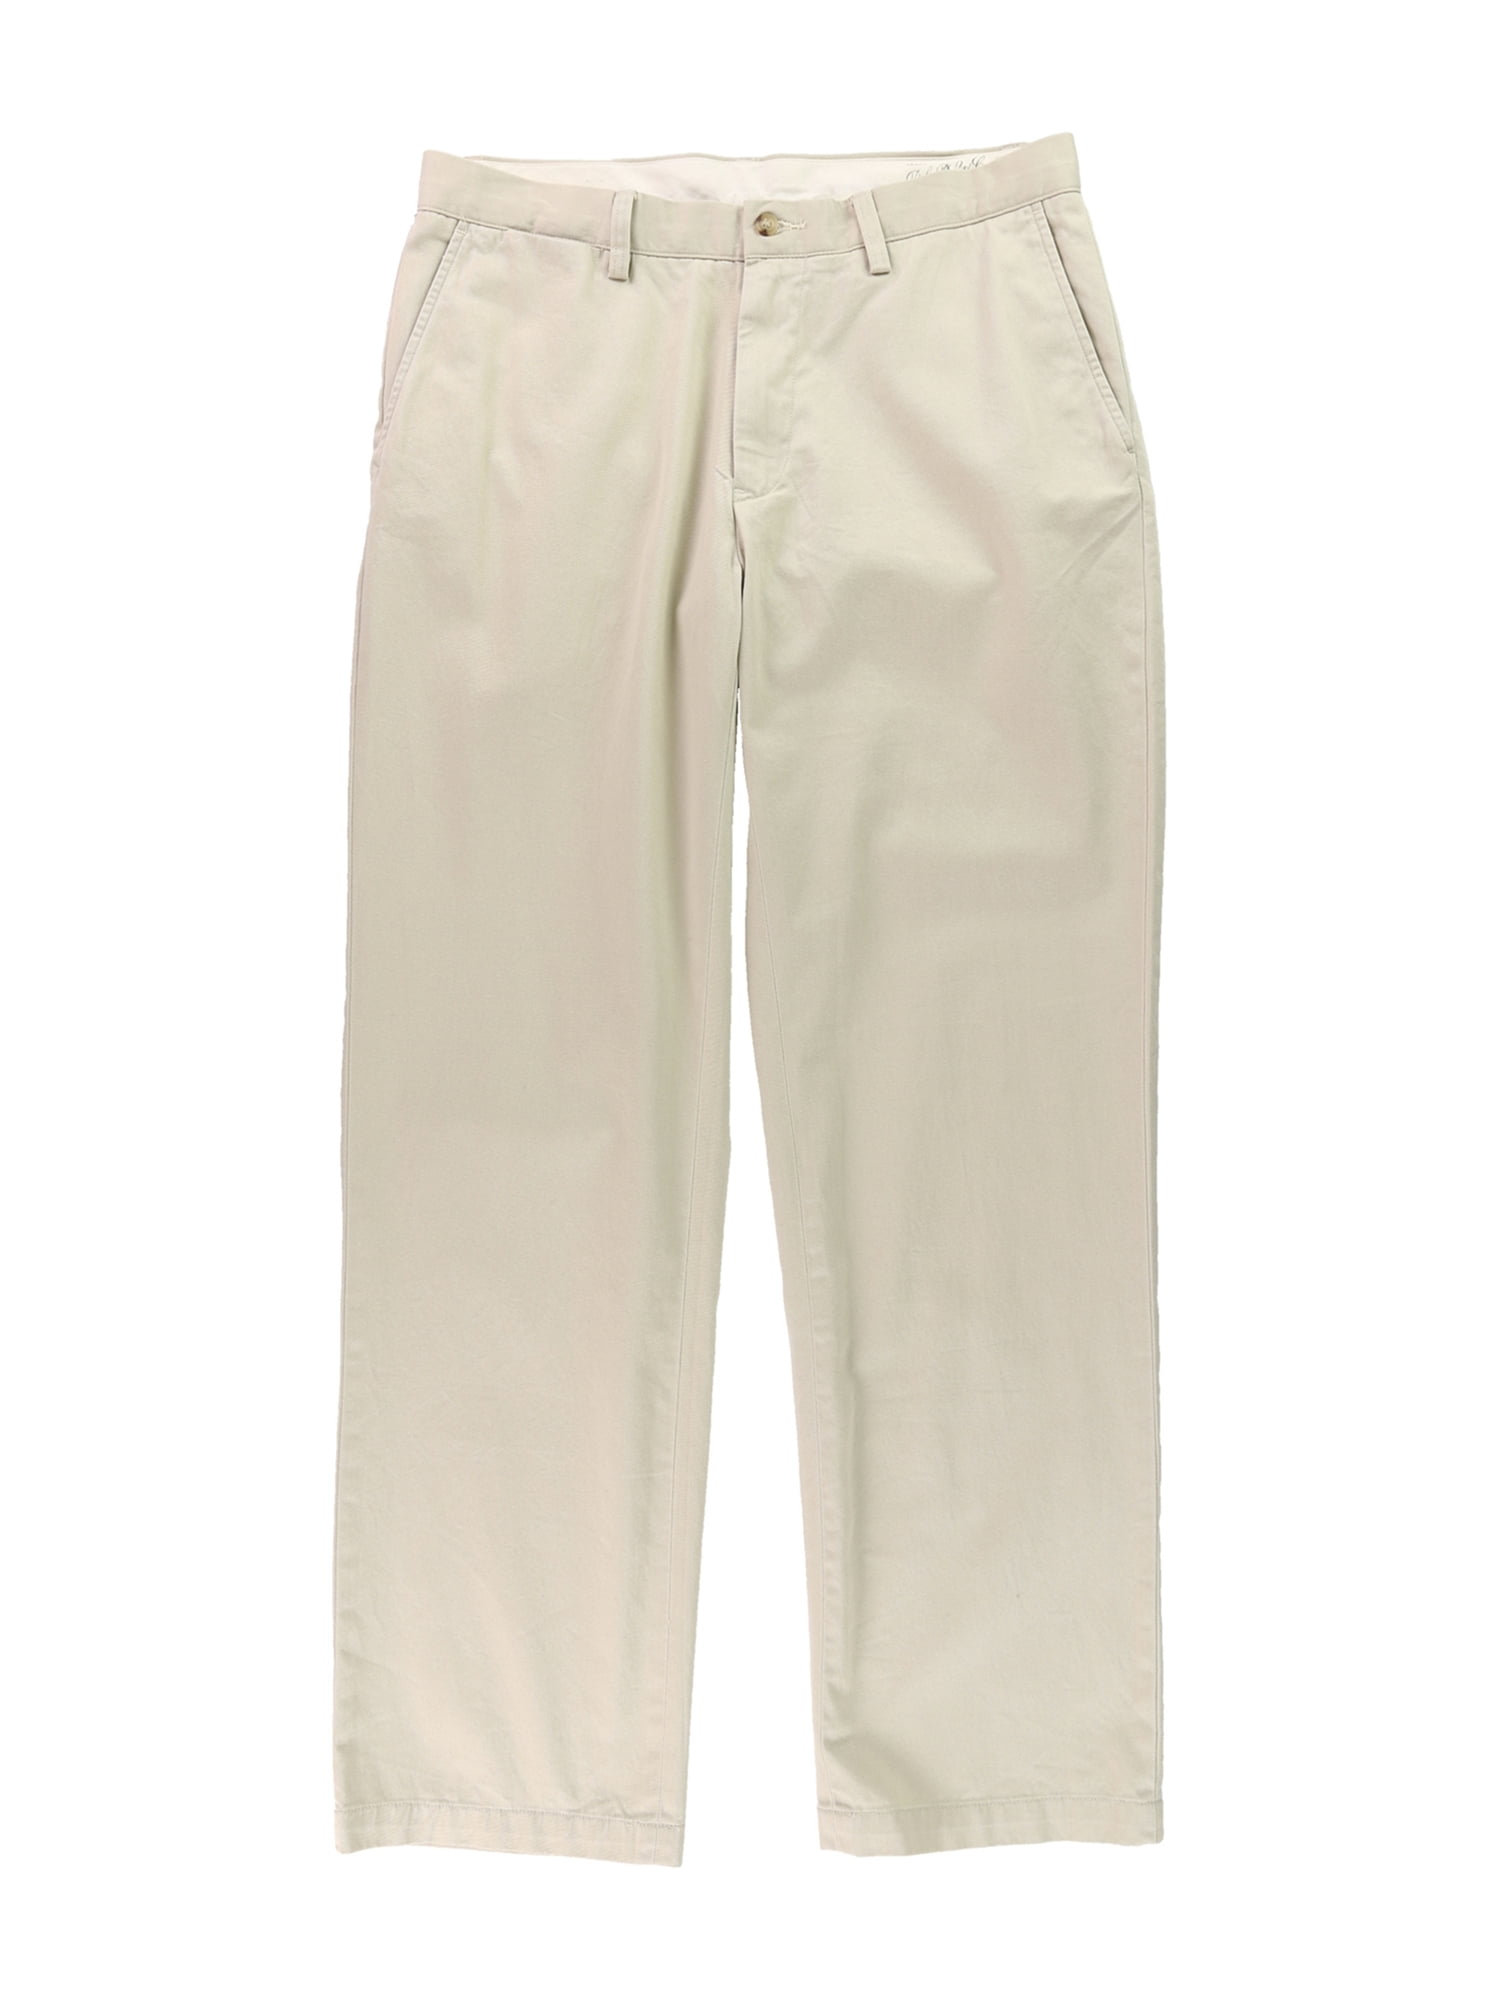 Ralph Lauren Mens Suffield Casual Chino Pants - Walmart.com